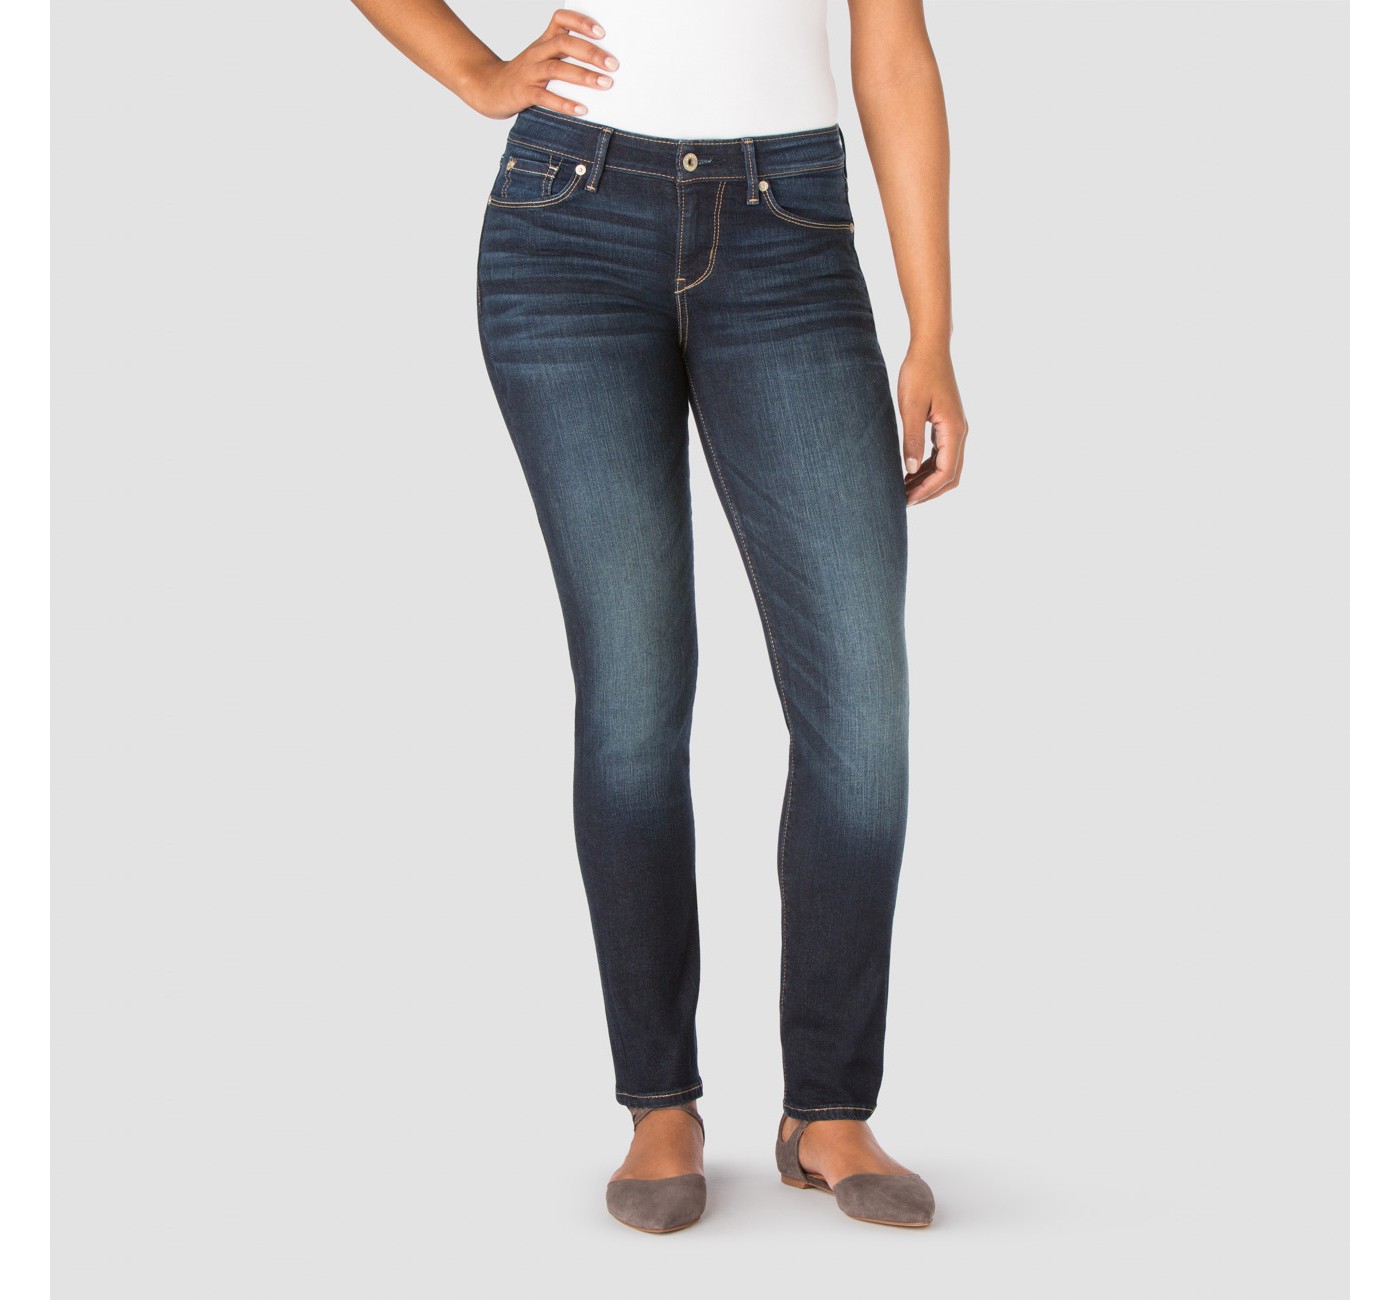 DENIZENÂ® from Levi'sÂ® Women's Modern Slim Jeans - Marissa - image 1 of 4